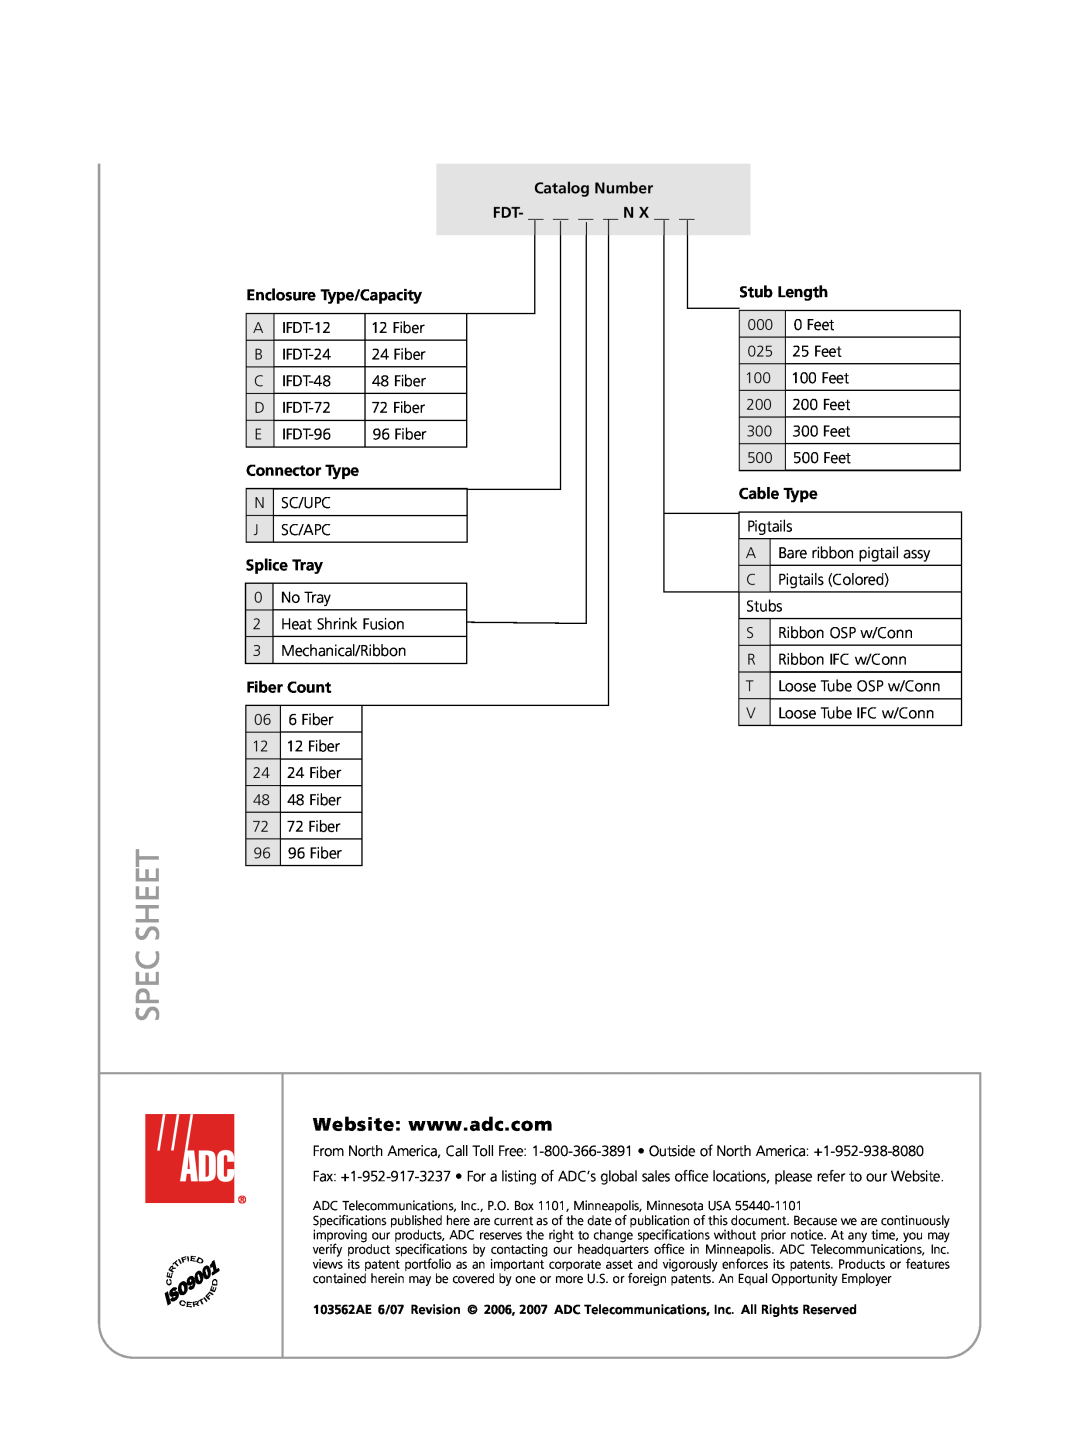 ADC Indoor Fiber Distribution Terminals Spec Sheet, Enclosure Type/Capacity, Connector Type, Splice Tray, Fiber Count 